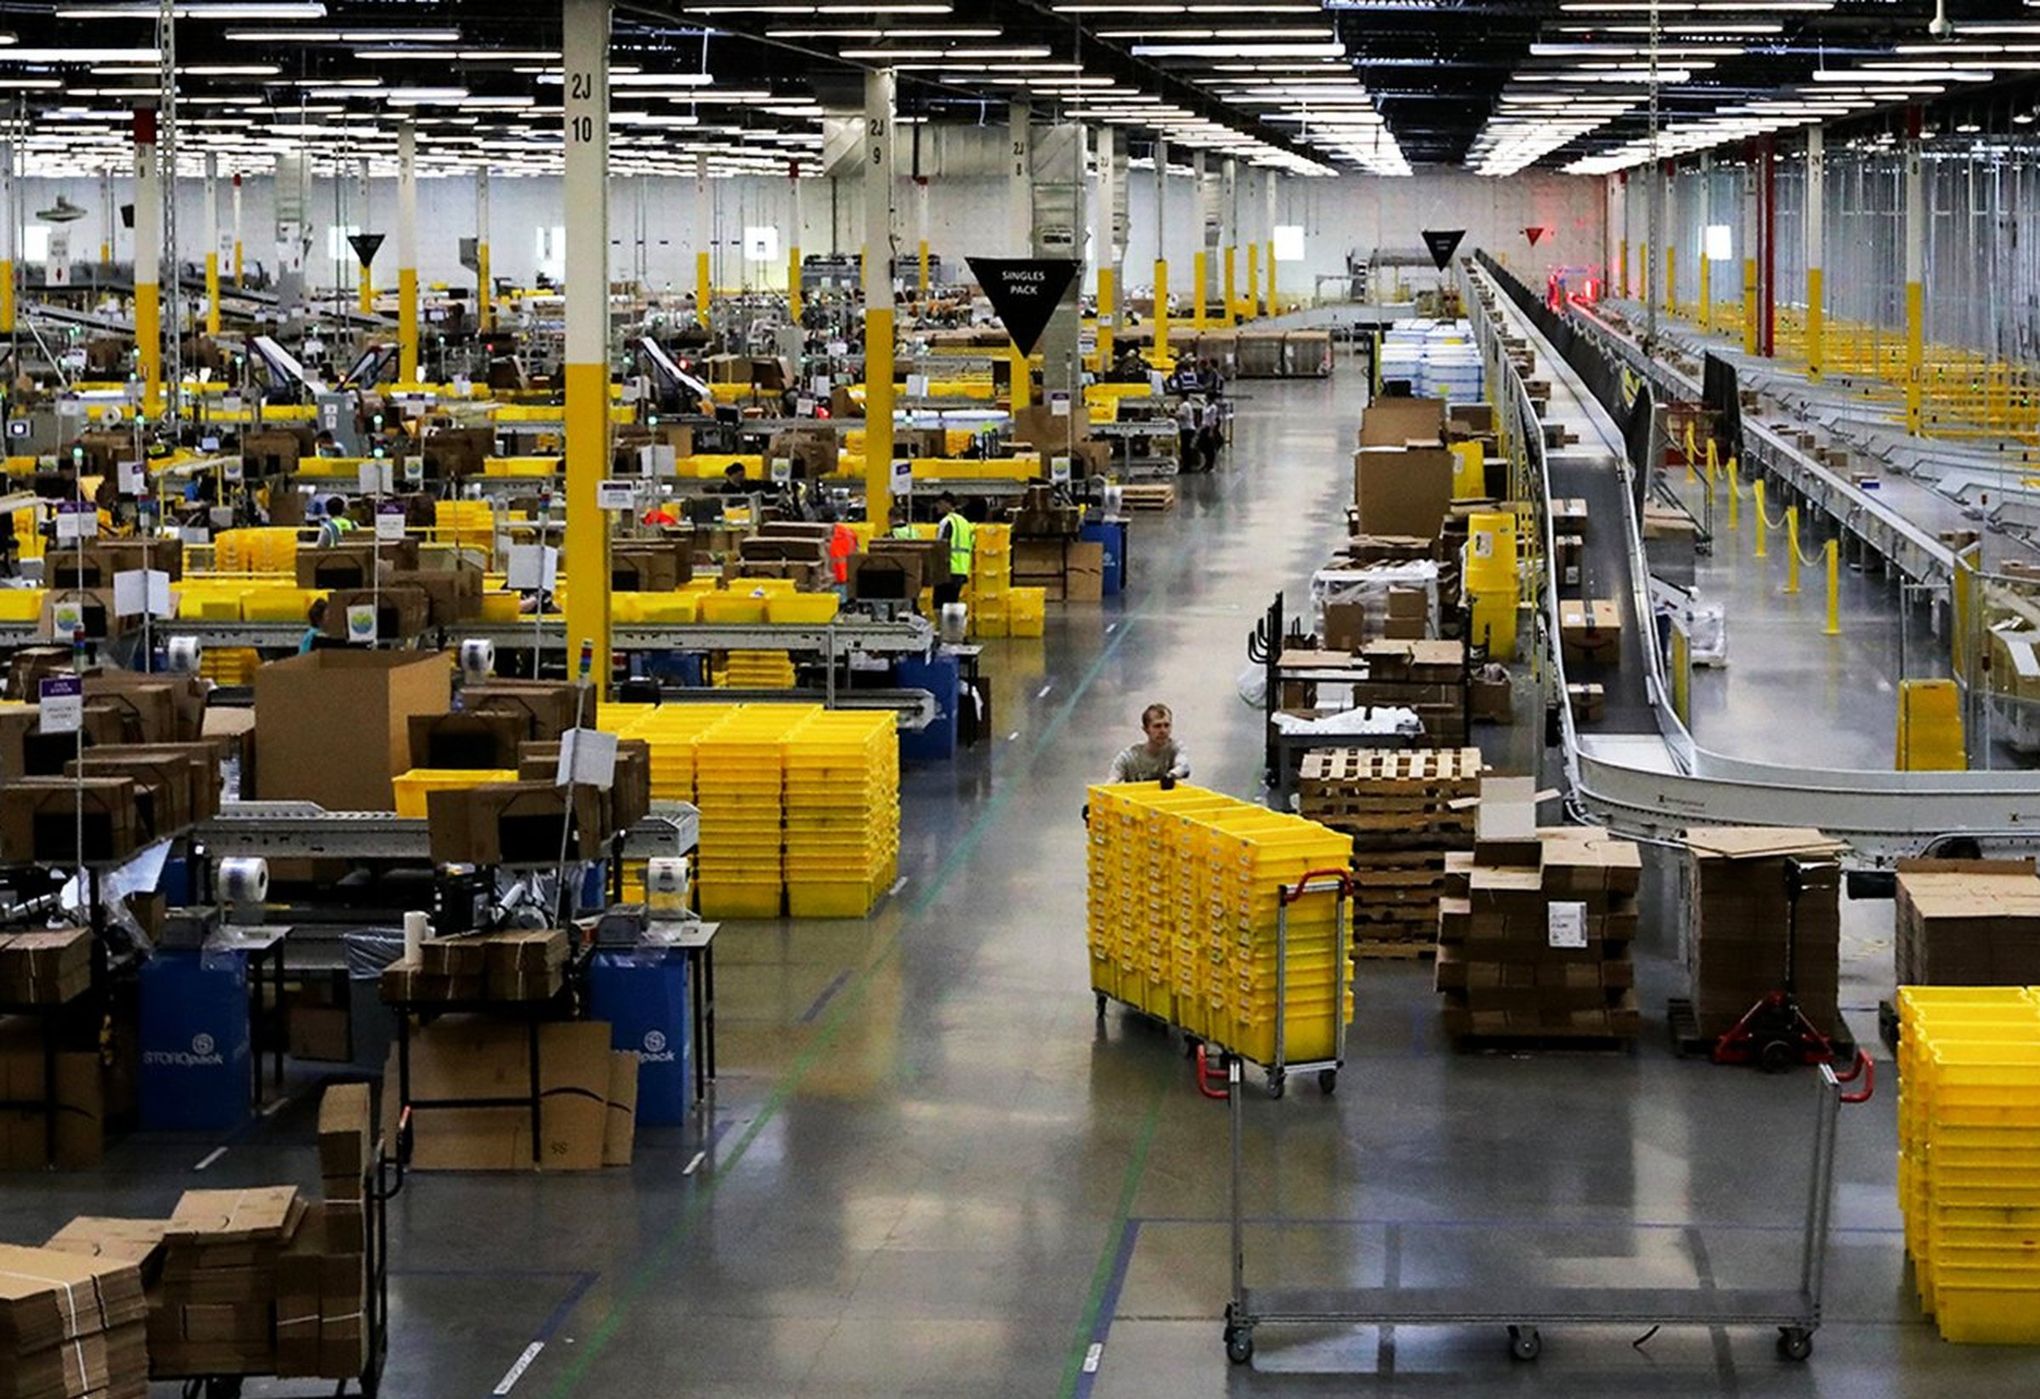 to maintain pace of warehouse work despite regulator's citation